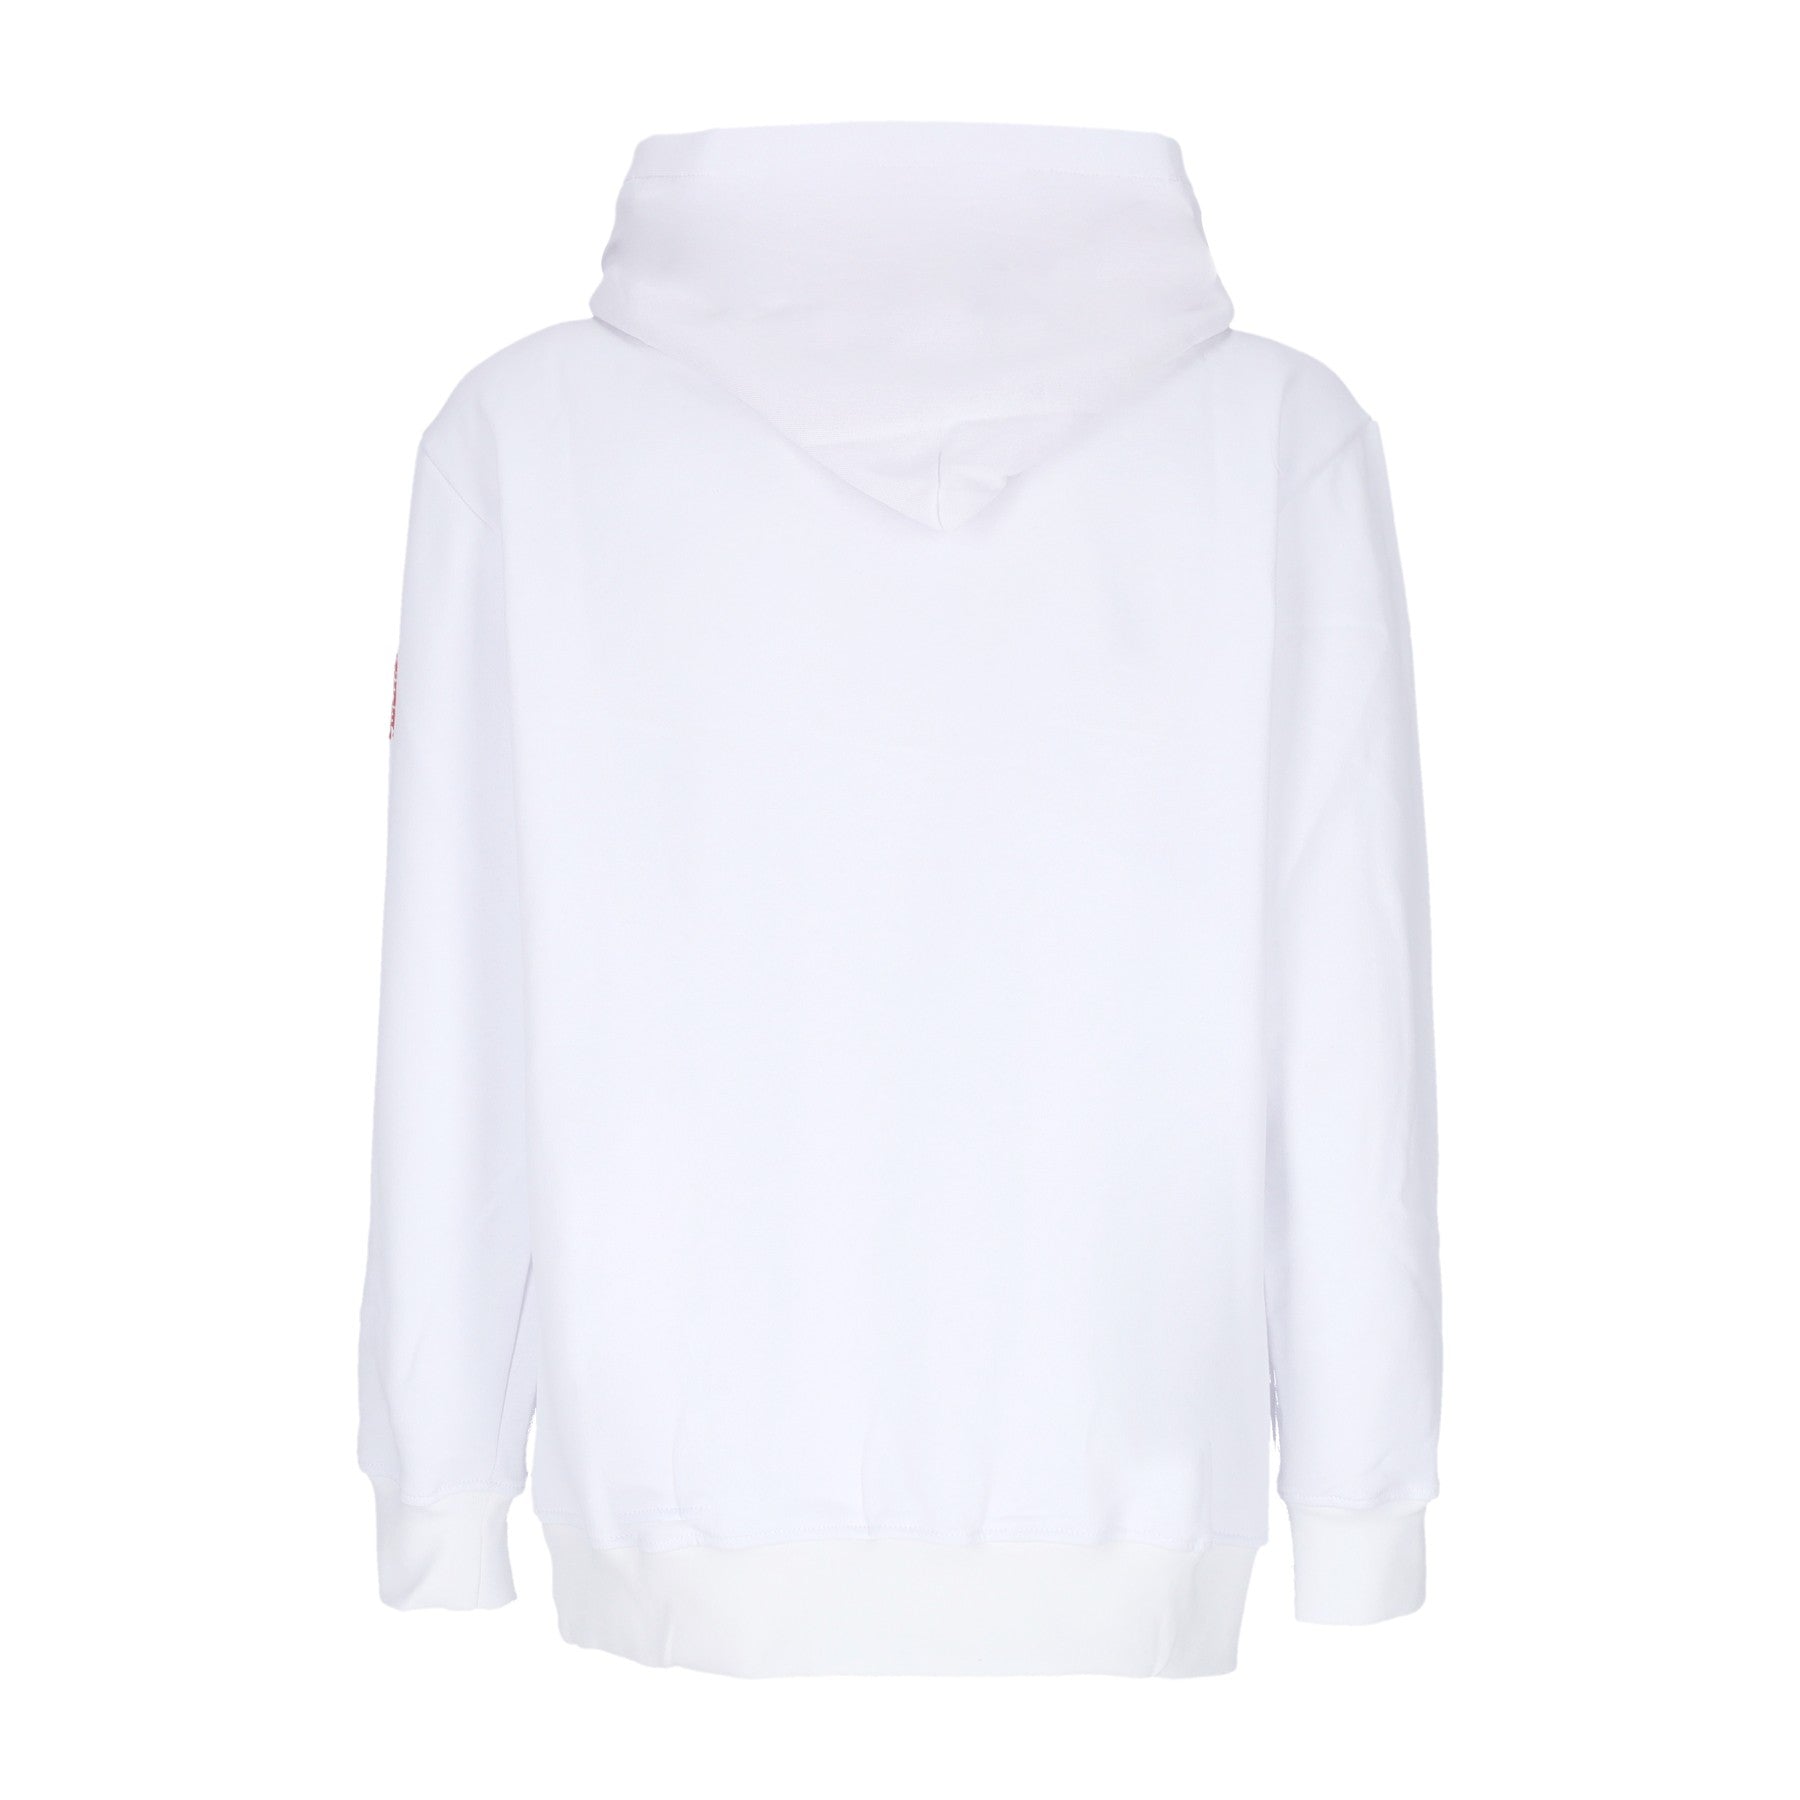 Lightweight Hooded Sweatshirt for Men Rabbit Hoodie White